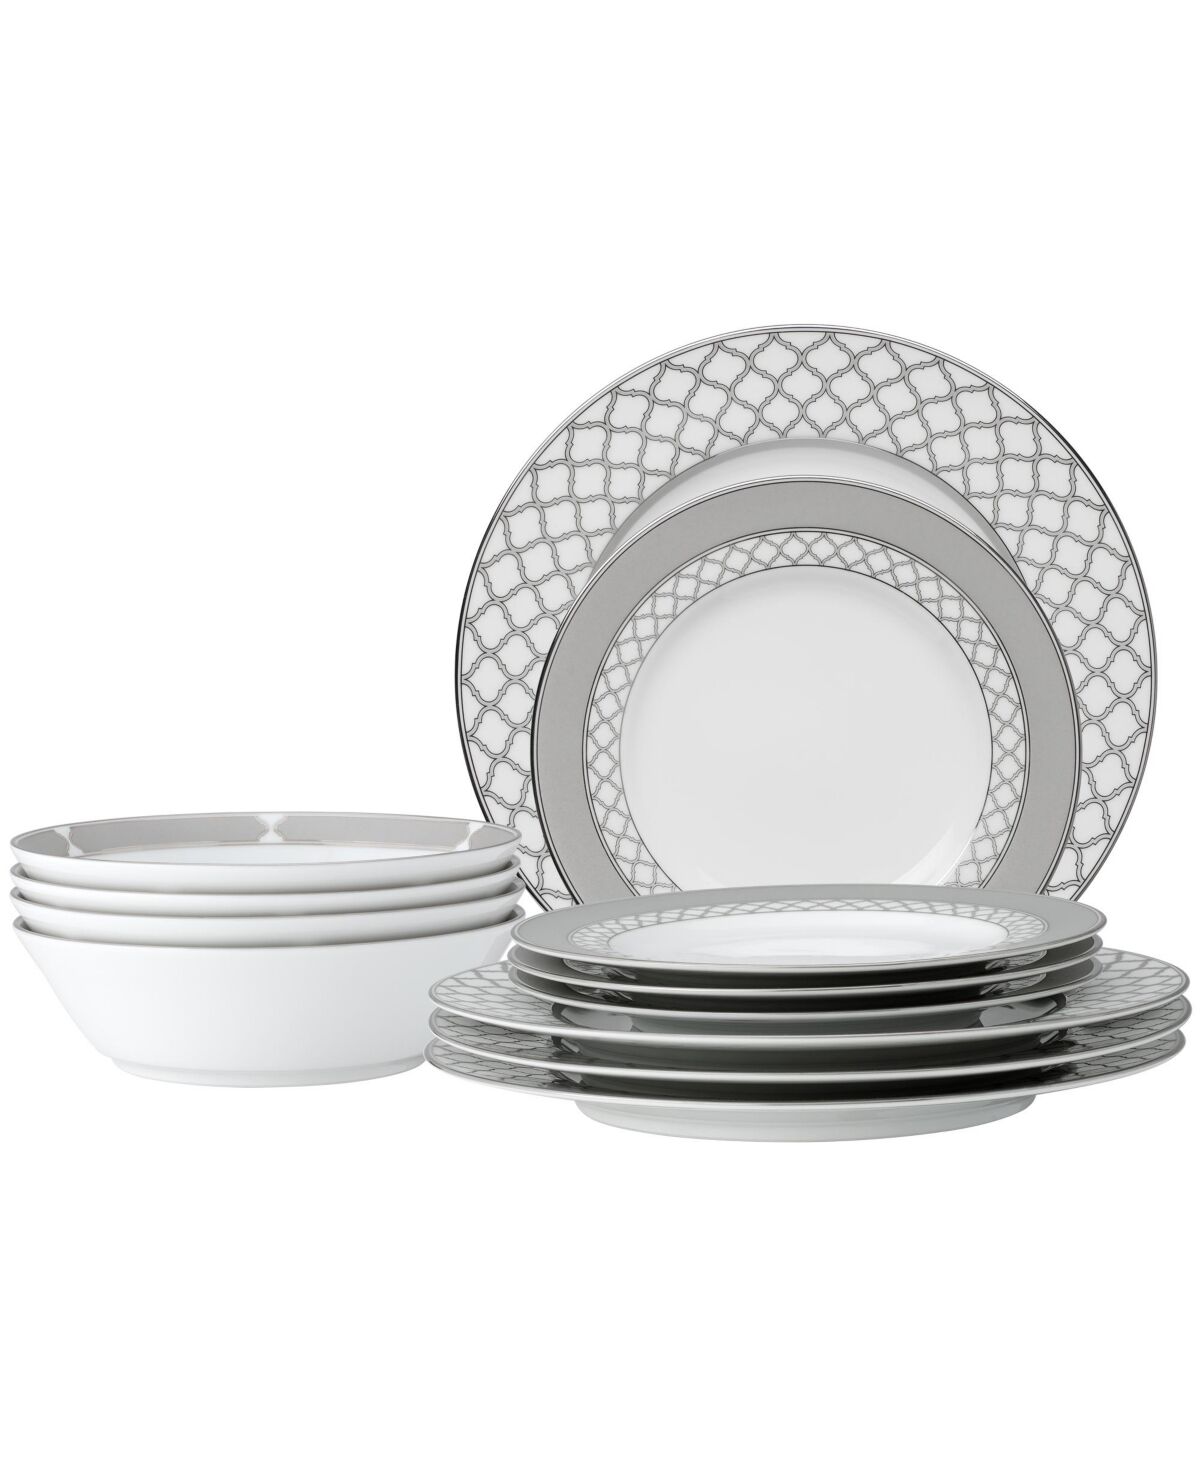 Noritake Eternal Palace 12 Pc Dinnerware Set - White And Platinum